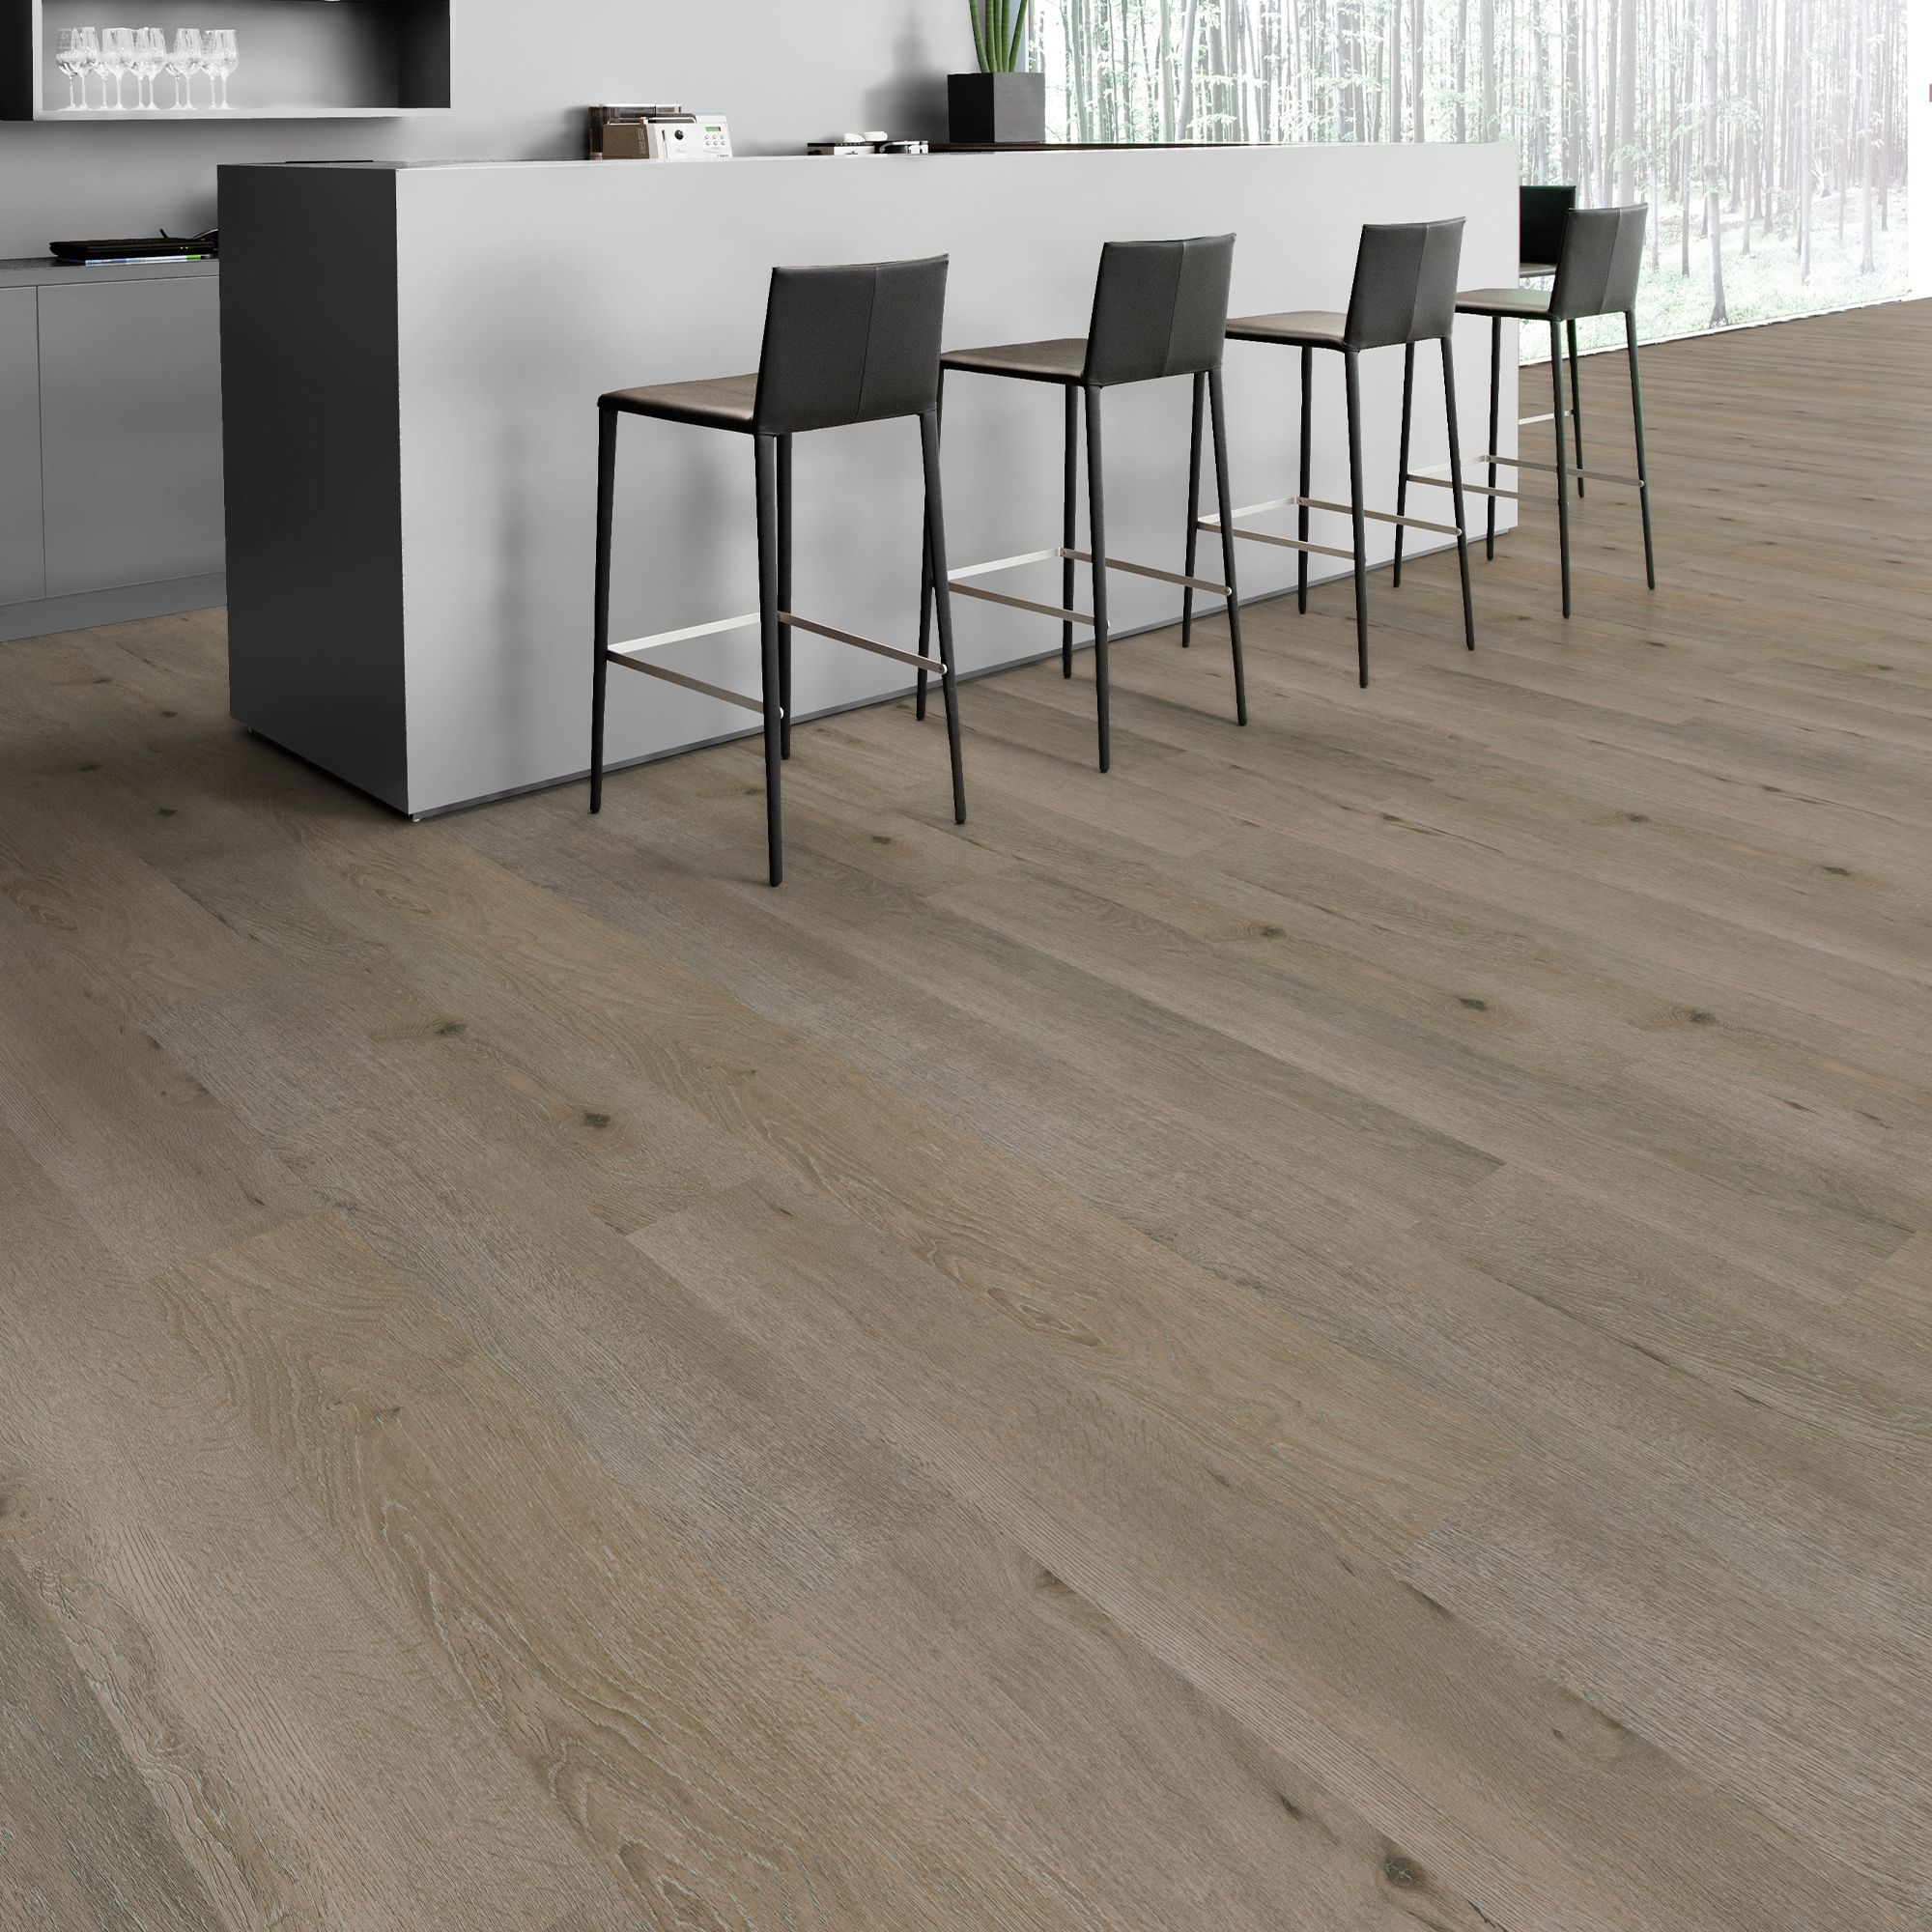 Nailsea Grey Oak Effect Laminate Flooring 1 49m Pack